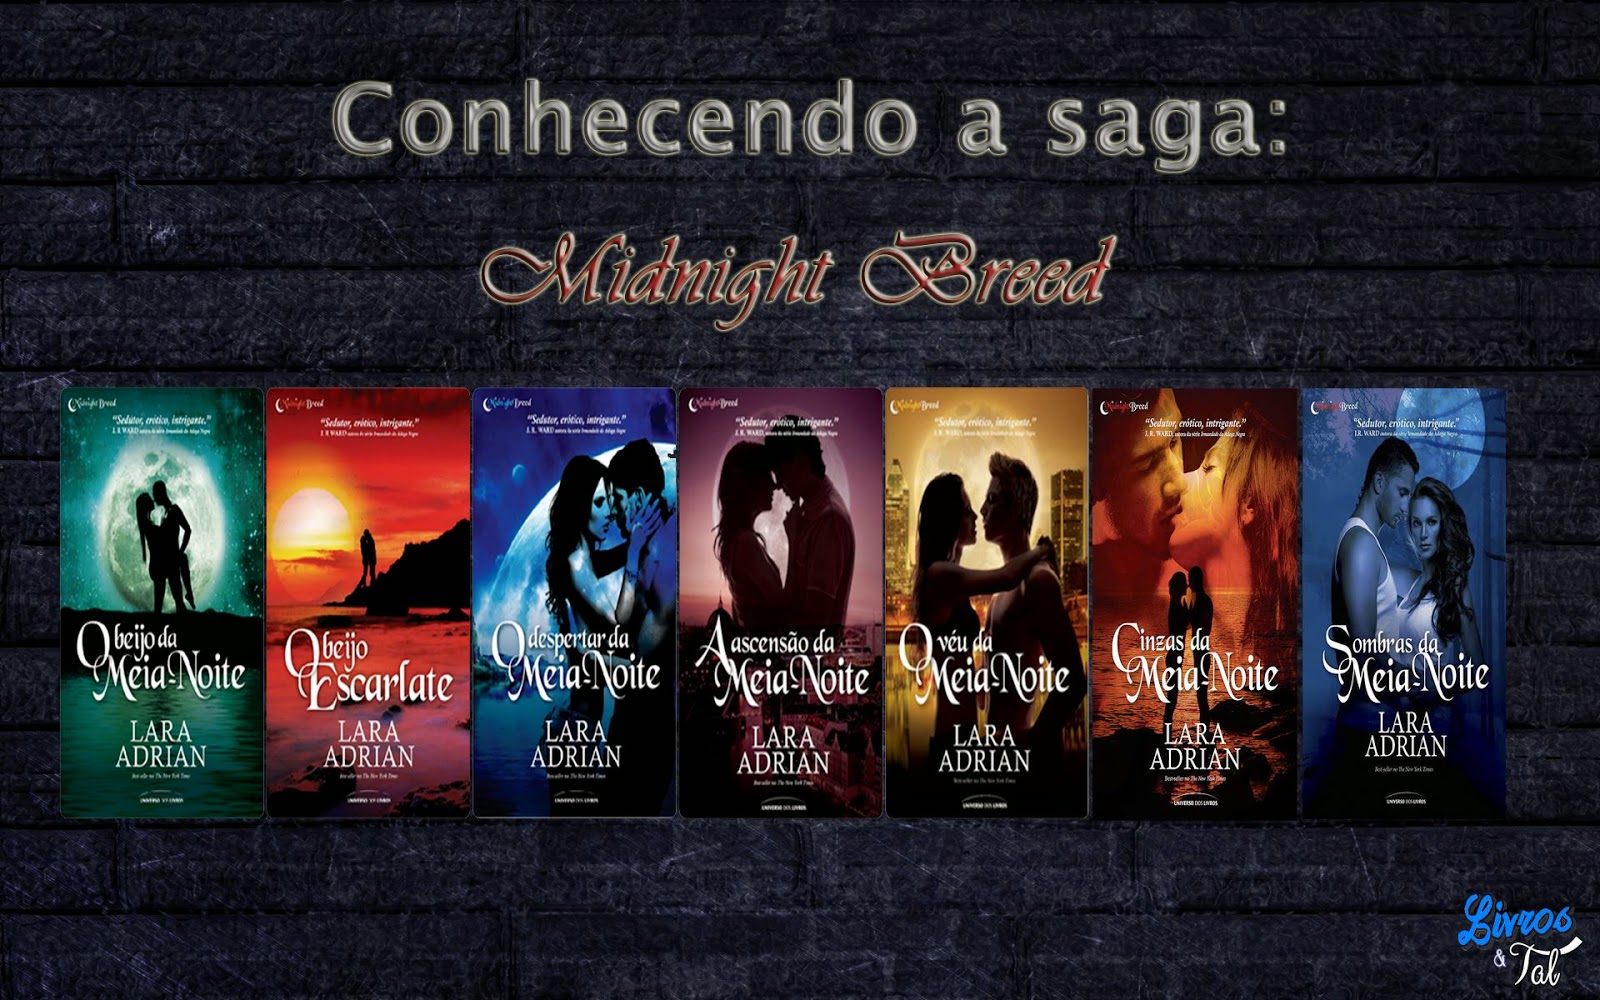 Critically Billable for me Sobre Sagas: Midnight Breed. - Livros & Tal